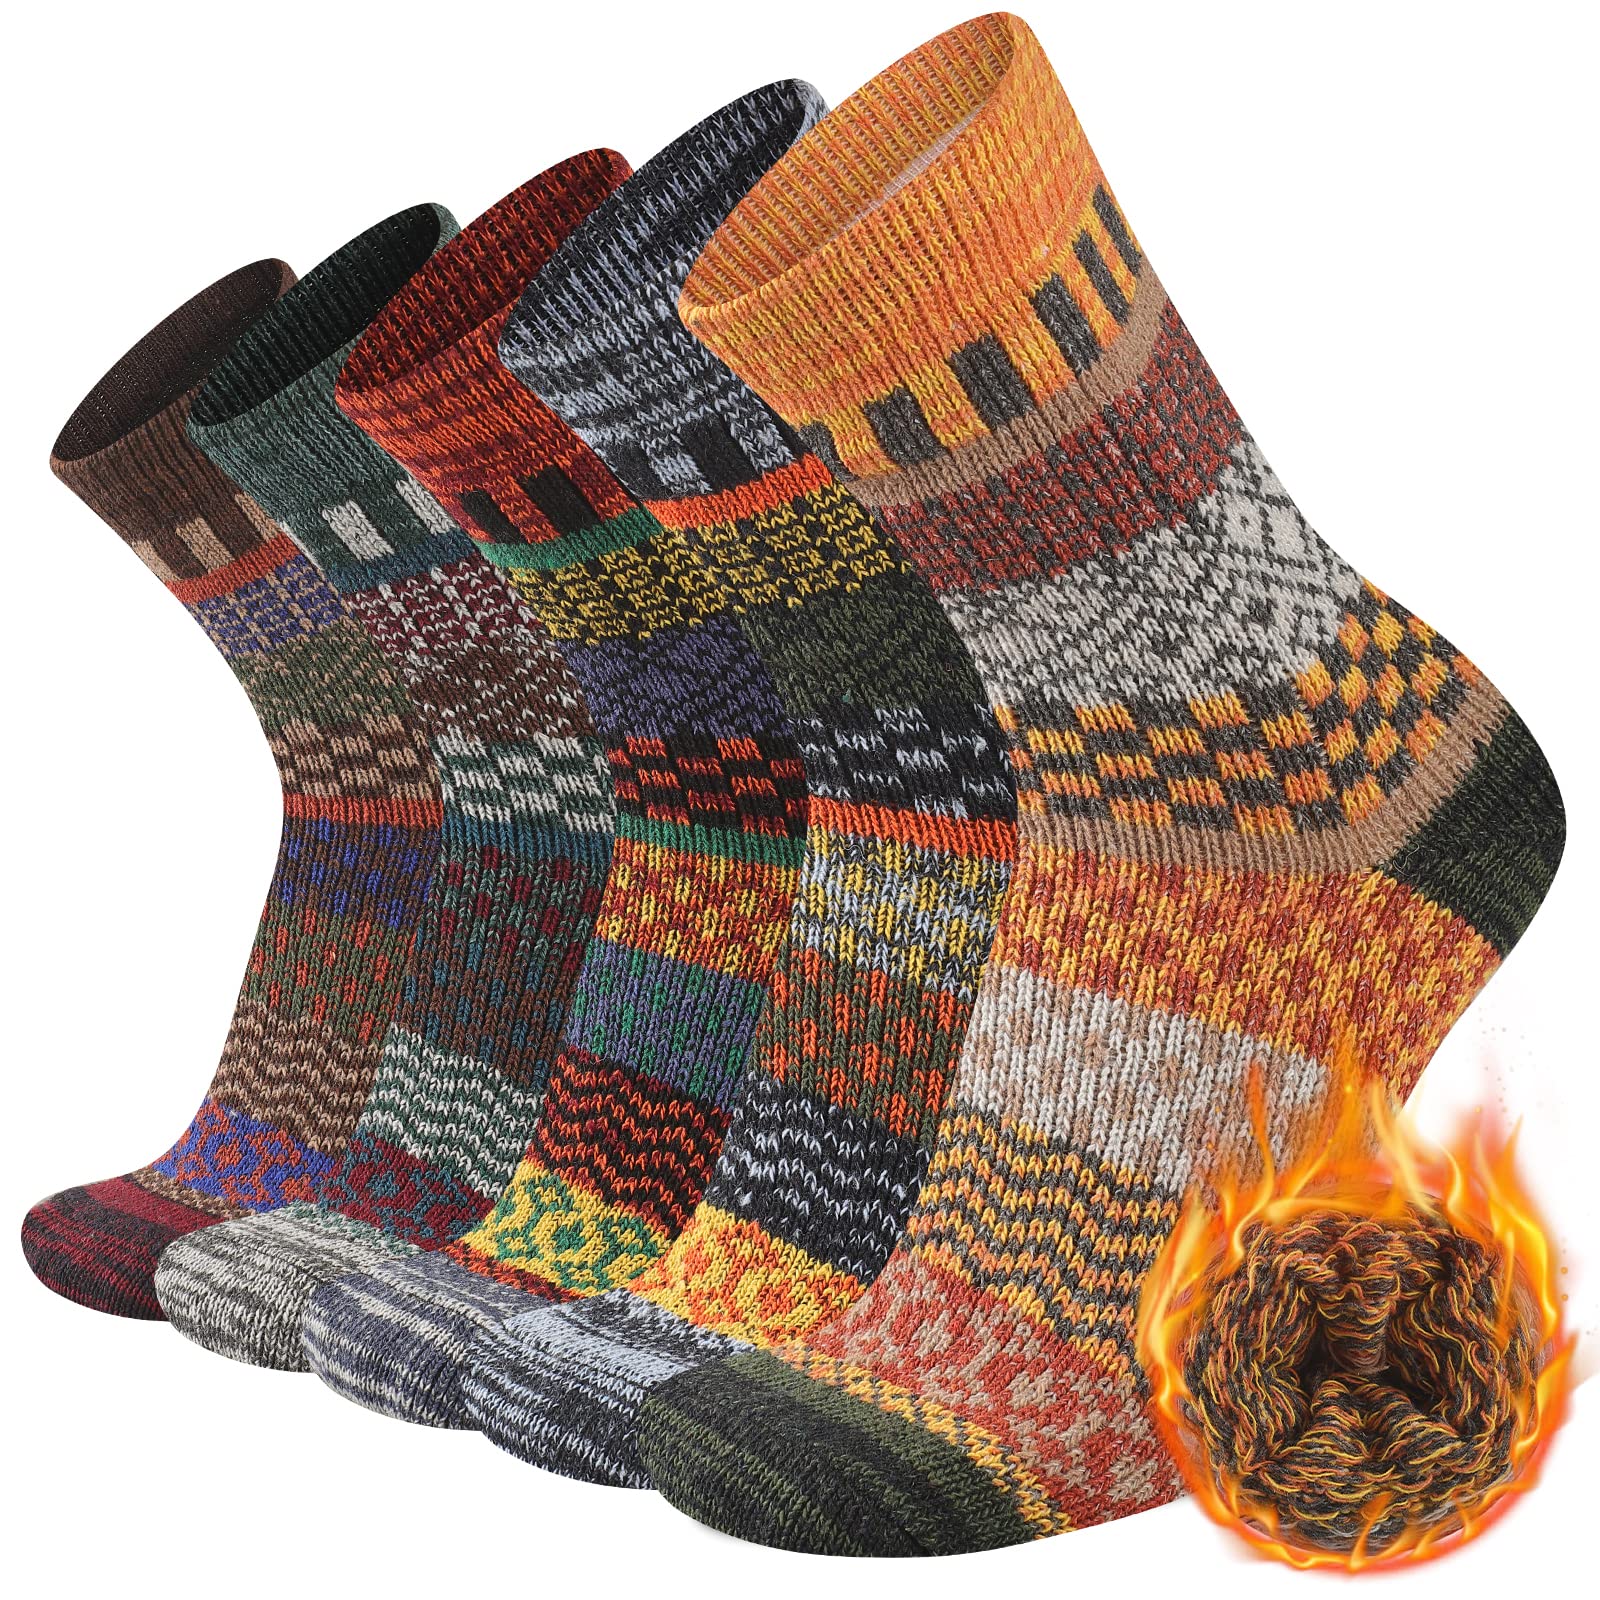 Heatuff Mens Warm Wool Socks Thermal Winter Thick Crew Pattern Socks Cold Weather 5 Pairs